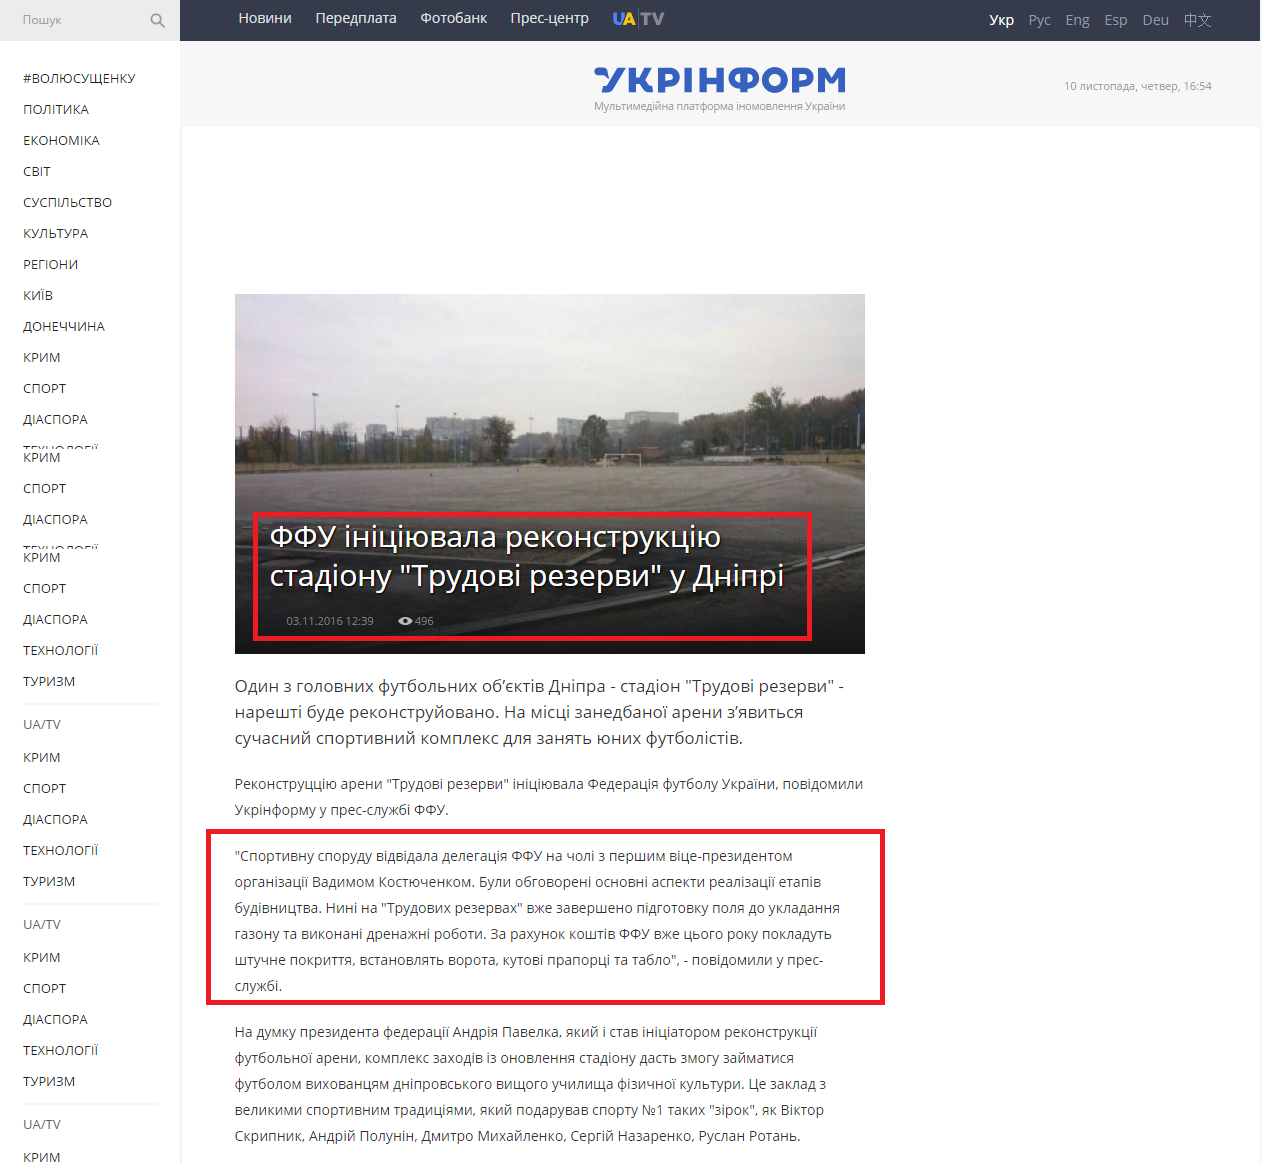 http://www.ukrinform.ua/rubric-diaspora/2113526-ukrainskogo-diplomata-nagorodili-aponskim-ordenom.html